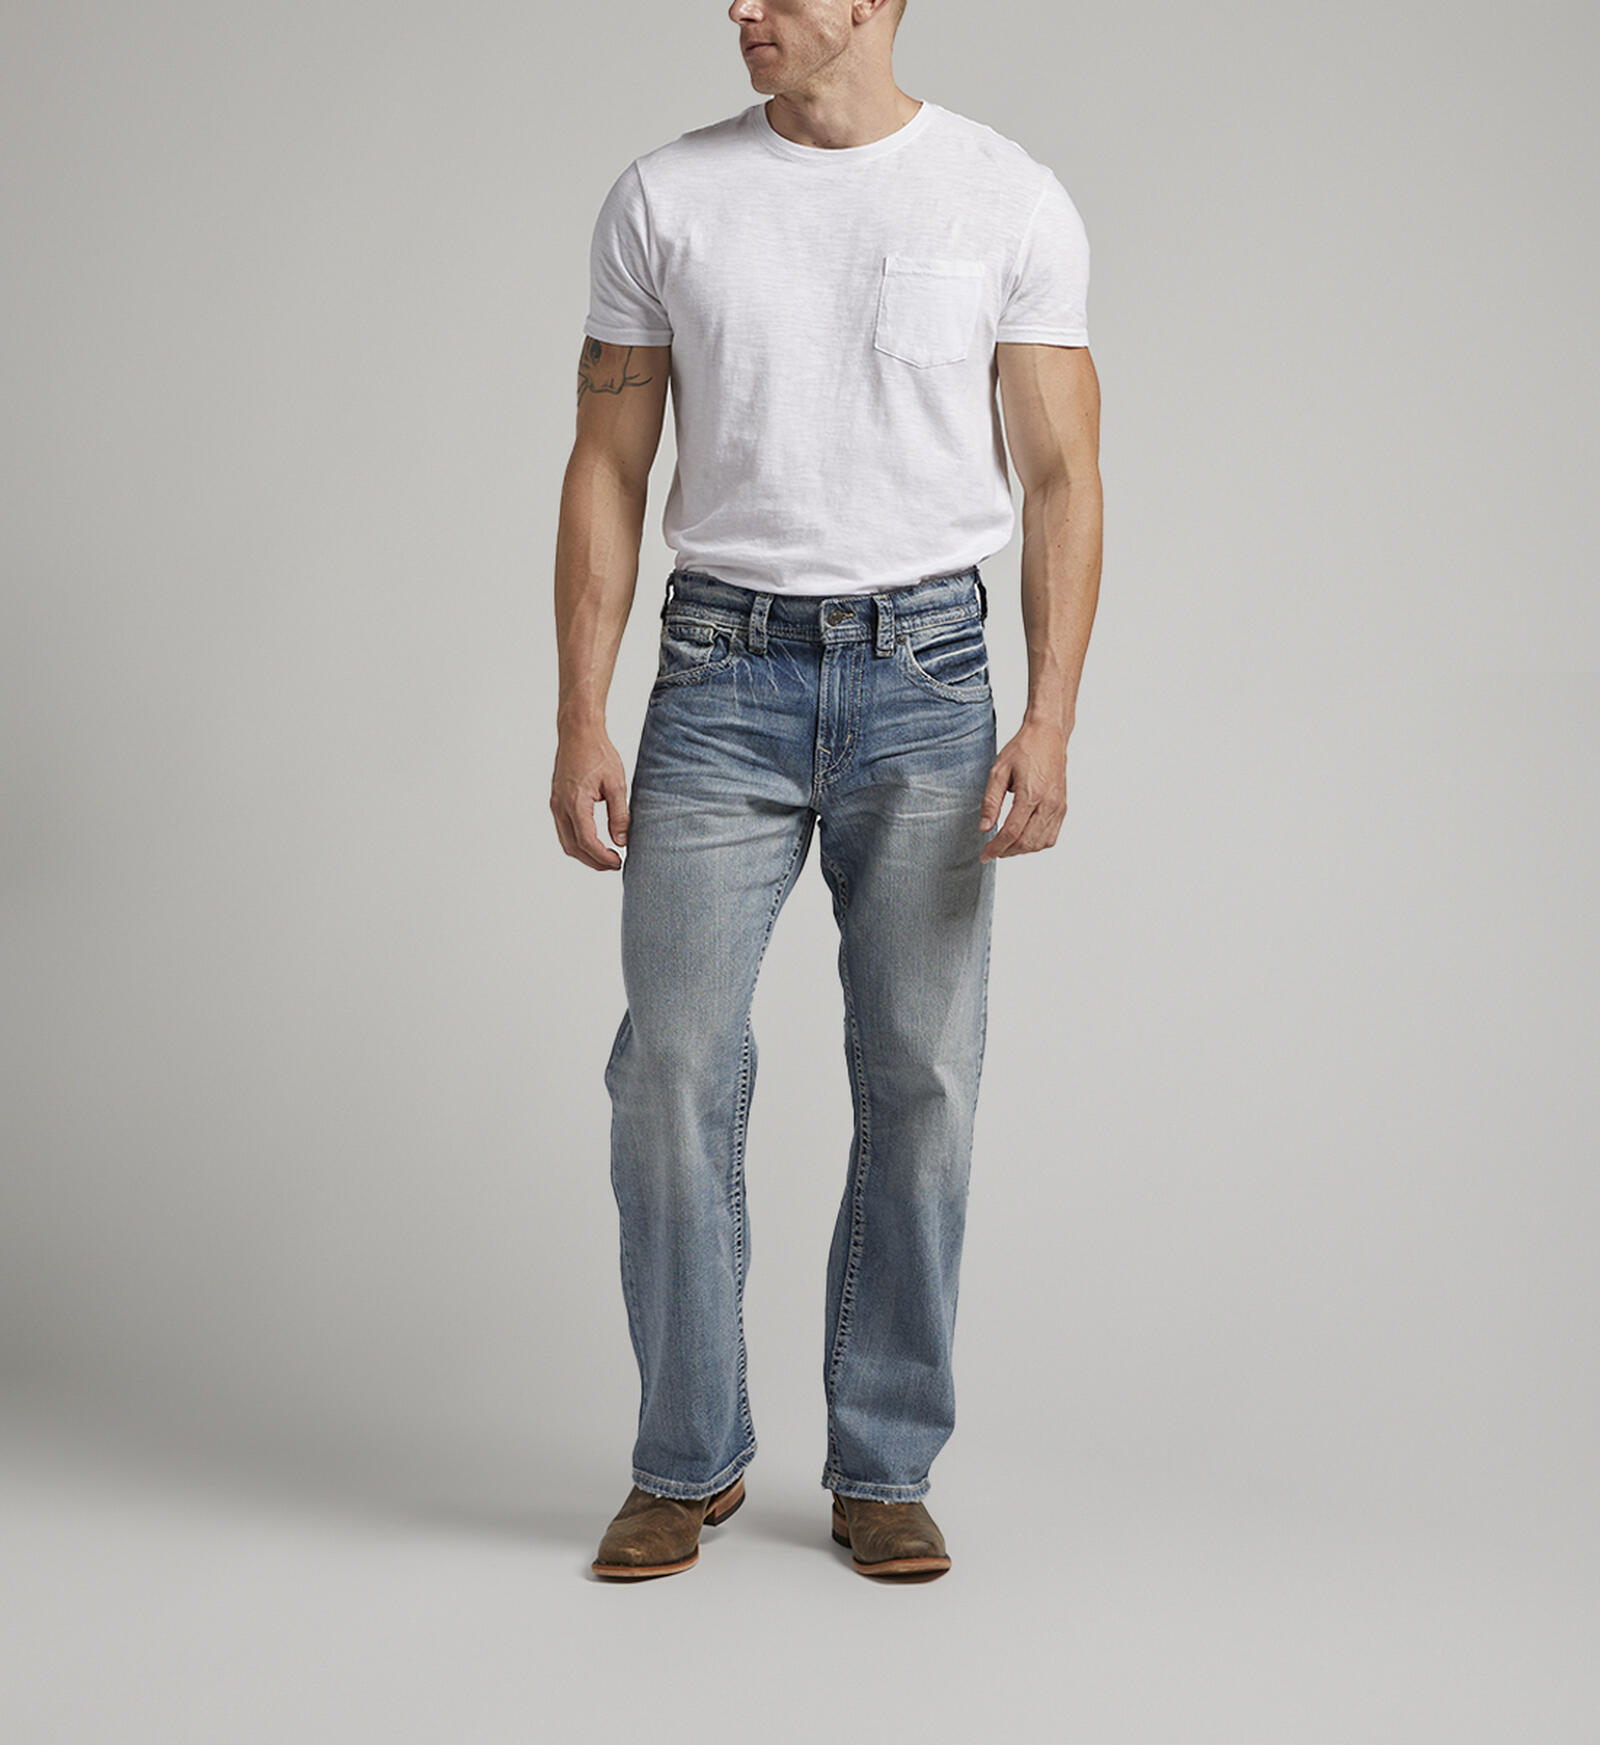 Men's Gray Jeans - Macy's